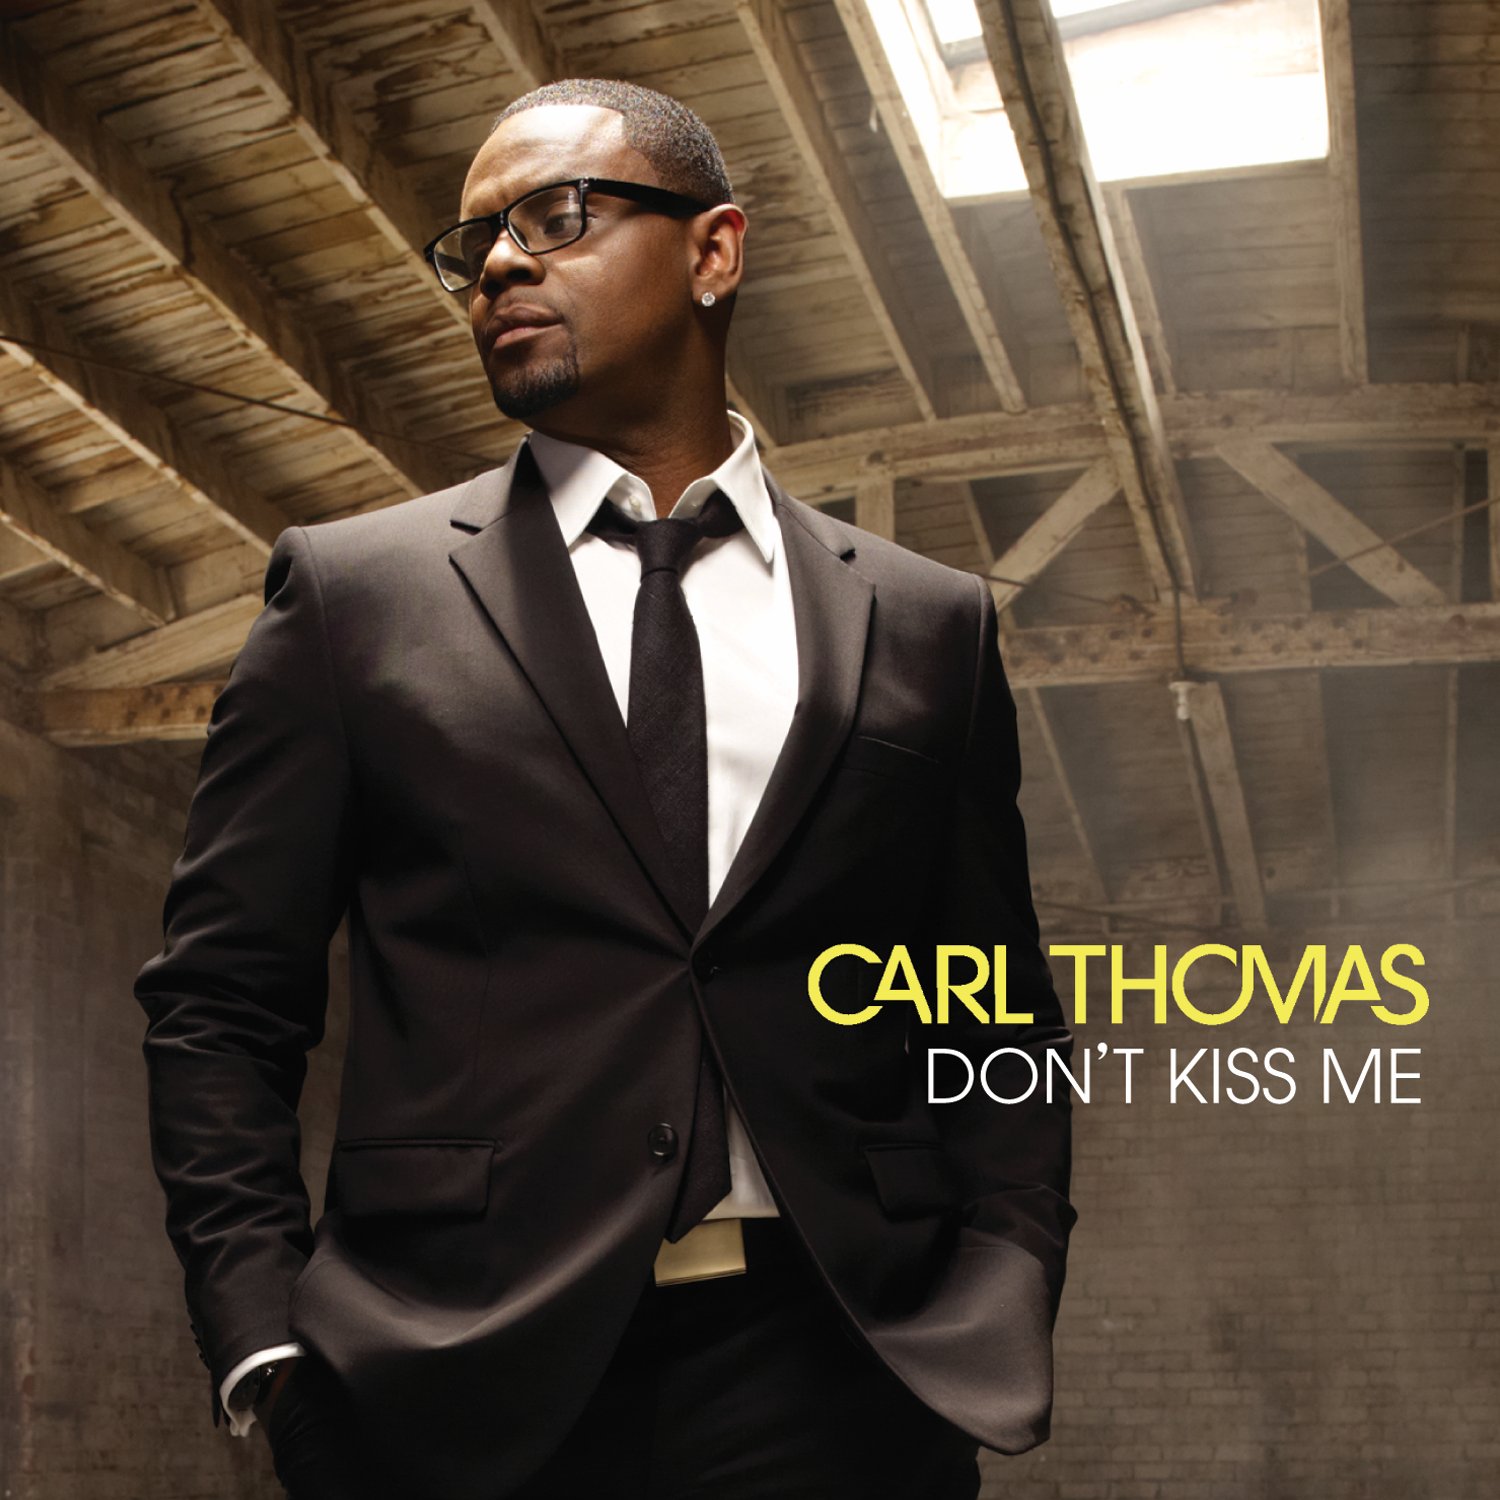 New Music: Carl Thomas "Don't Kiss Me" (Written by Rico Love)